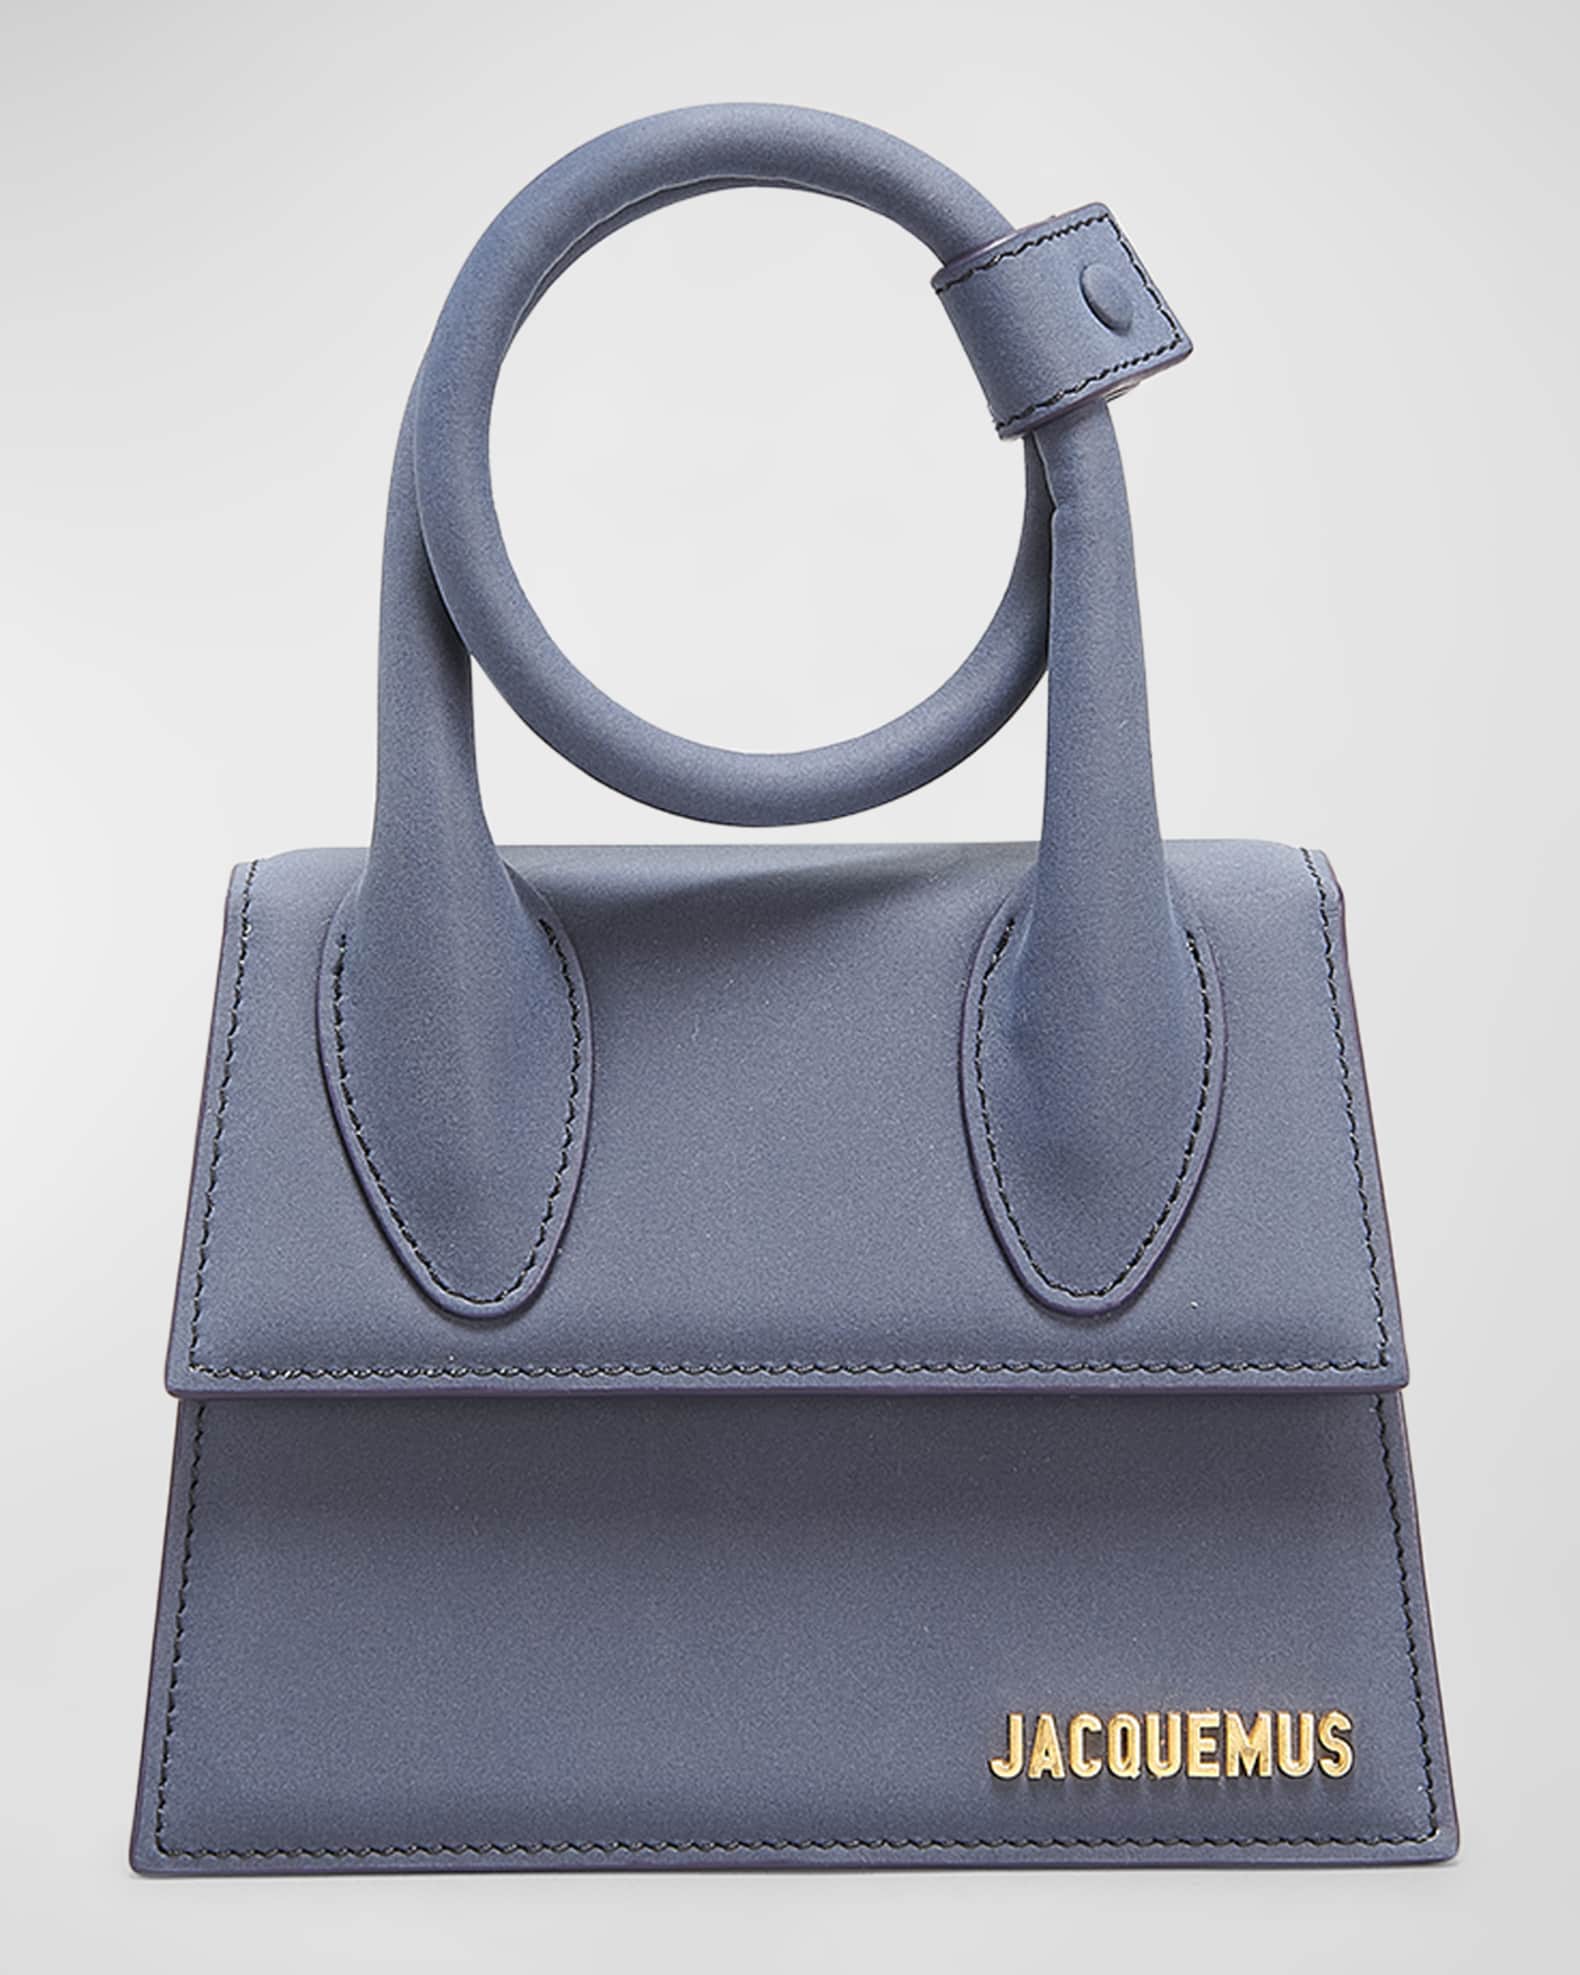 Jacquemus Le Chiquito Noeud Top Handle Bag